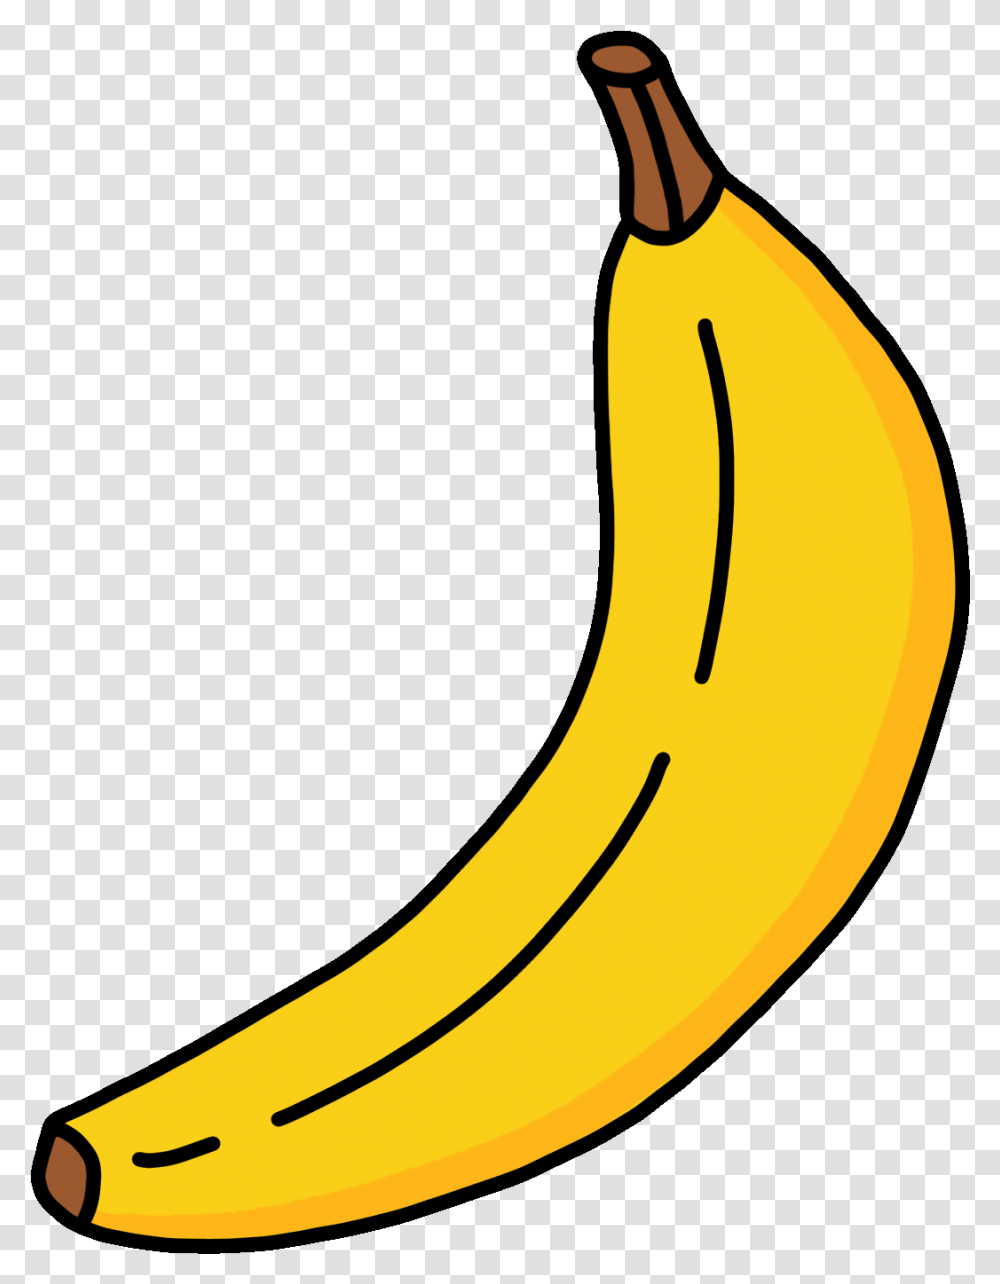 Bananas Graphic Freeuse Clipart Download Gambar Pisang Animasi, Fruit, Plant, Food Transparent Png